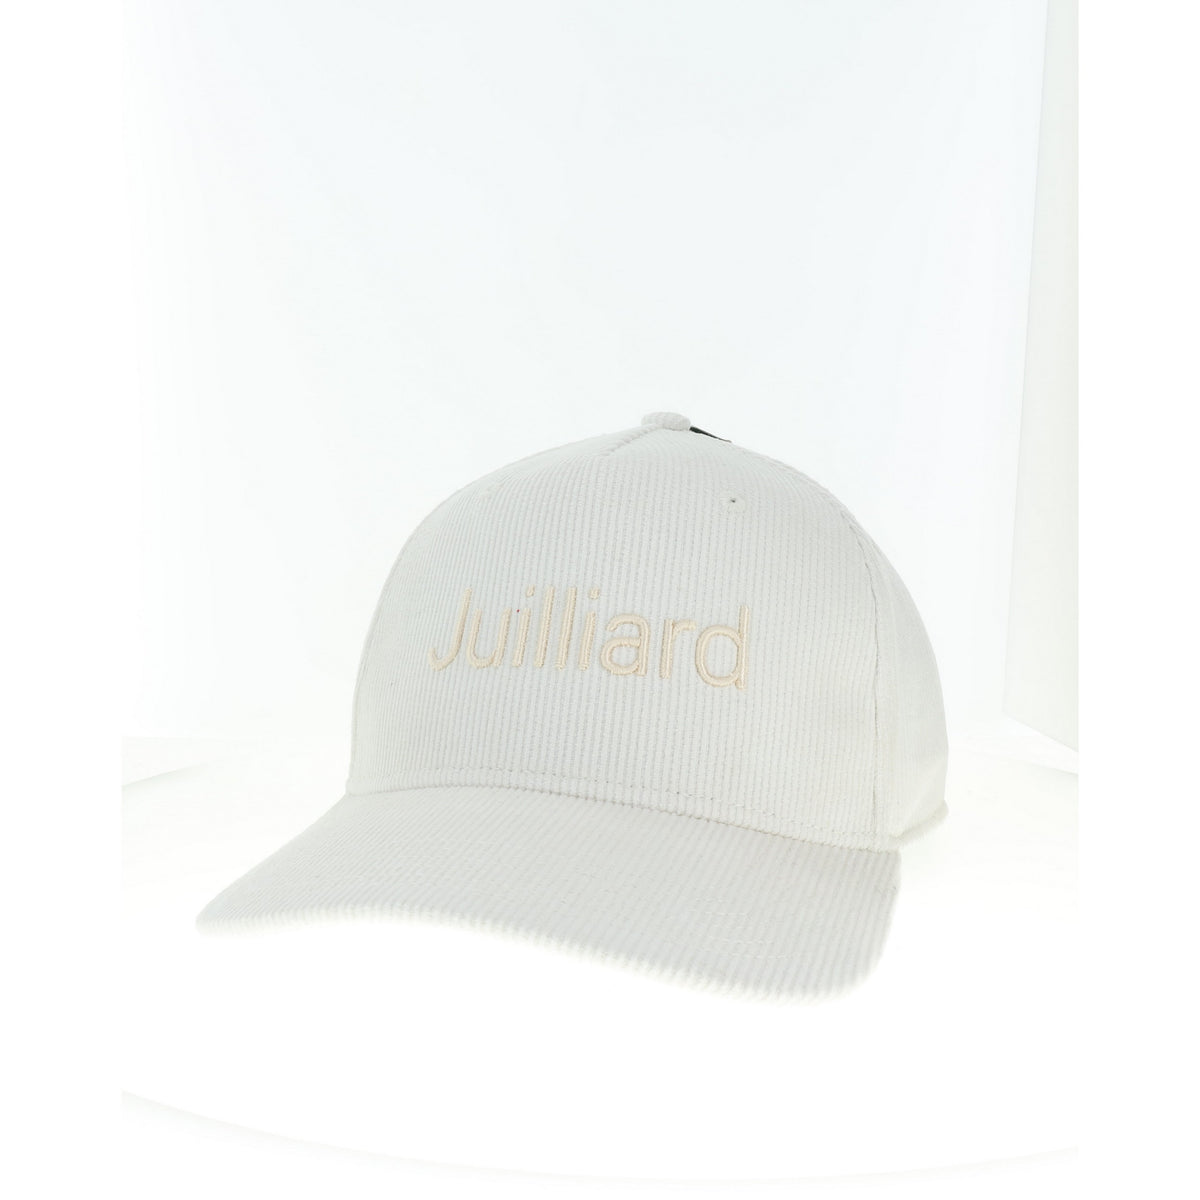 Cap: Corduroy Juilliard Official Logo